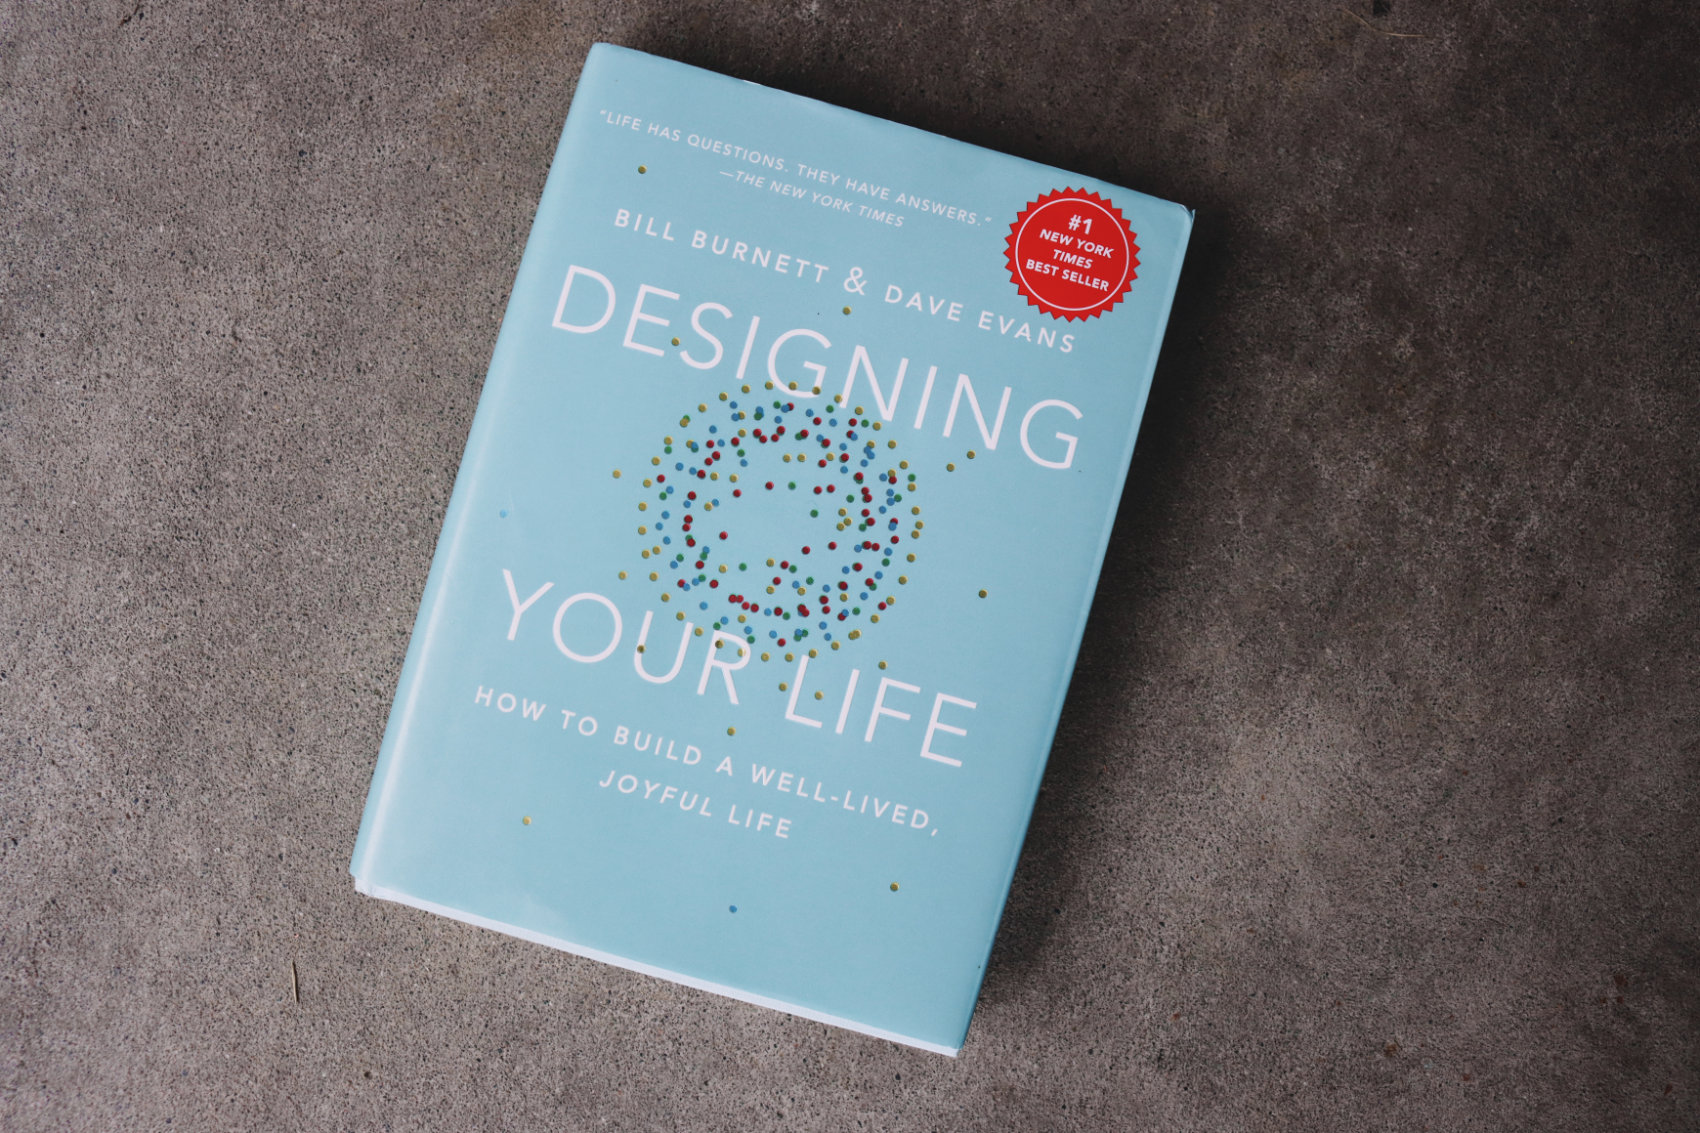 Designing Your Life by Bill Burnett & Dave Evans